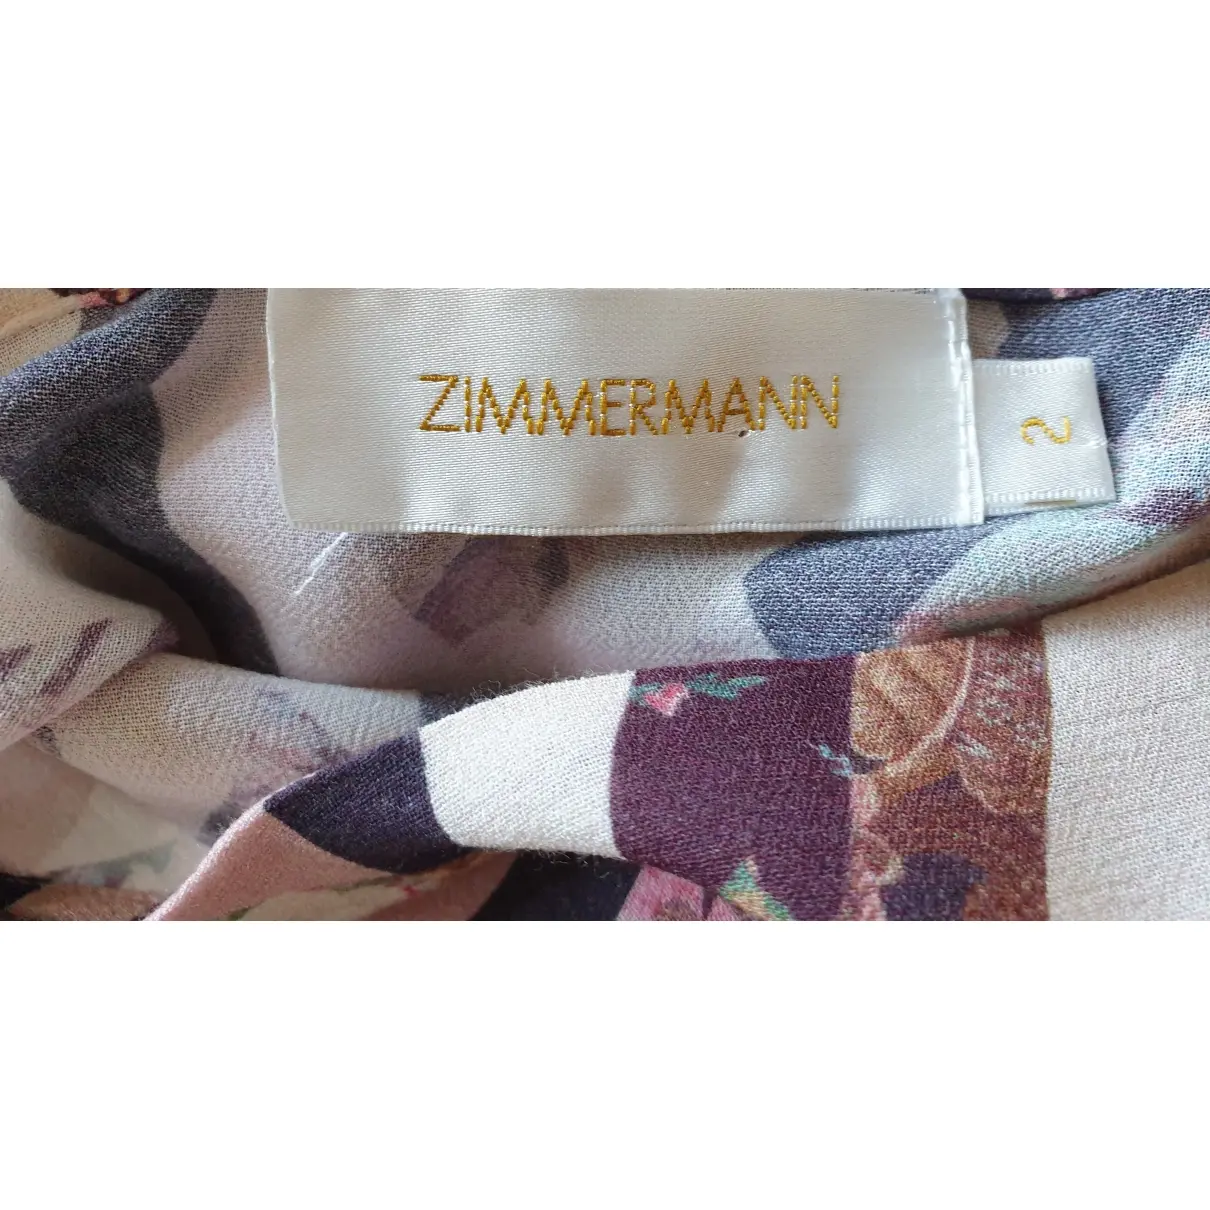 Buy Zimmermann Mini dress online